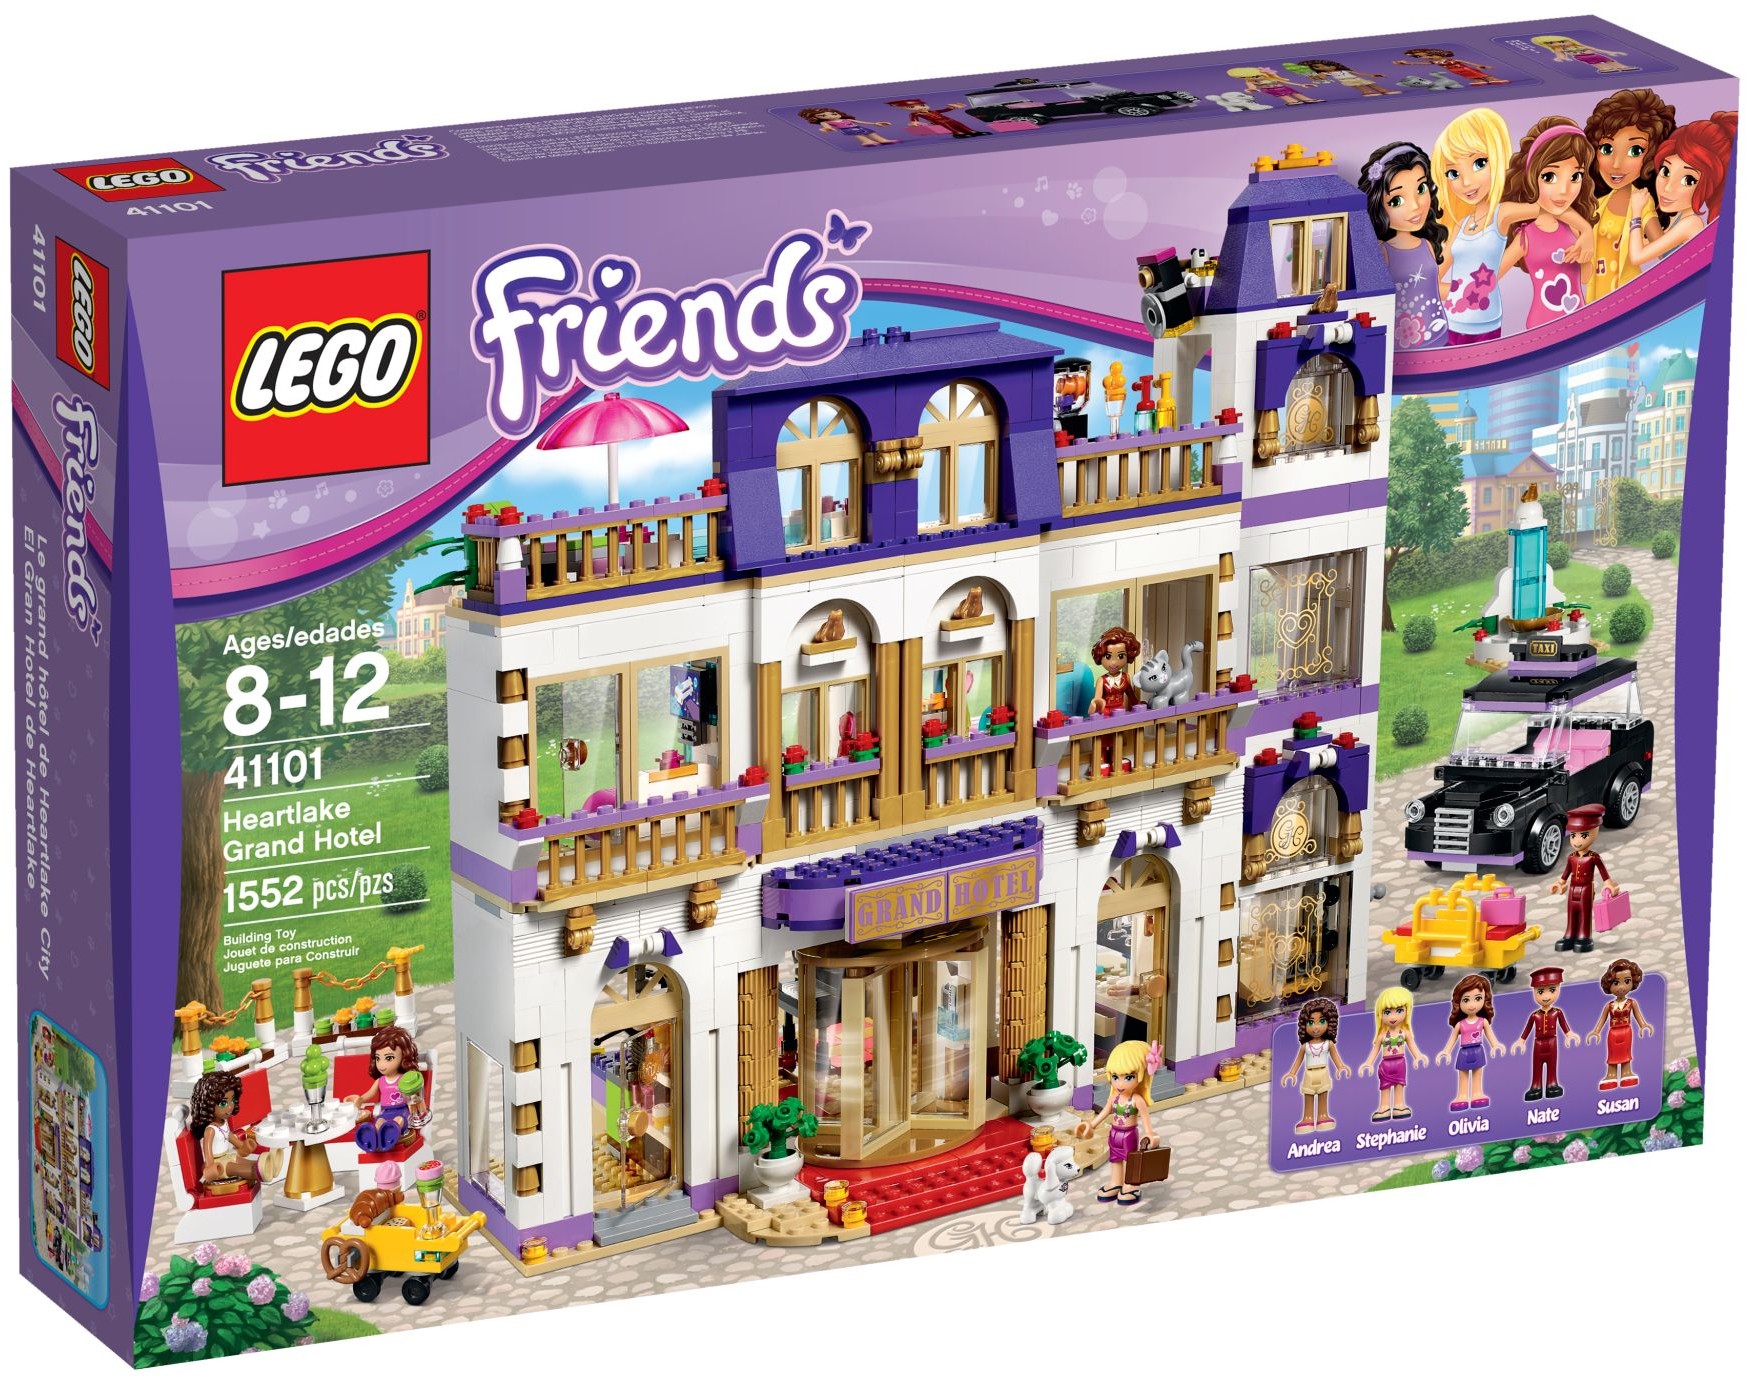 Heartlake Grand Hotel (41101), LEGO Friends Wiki